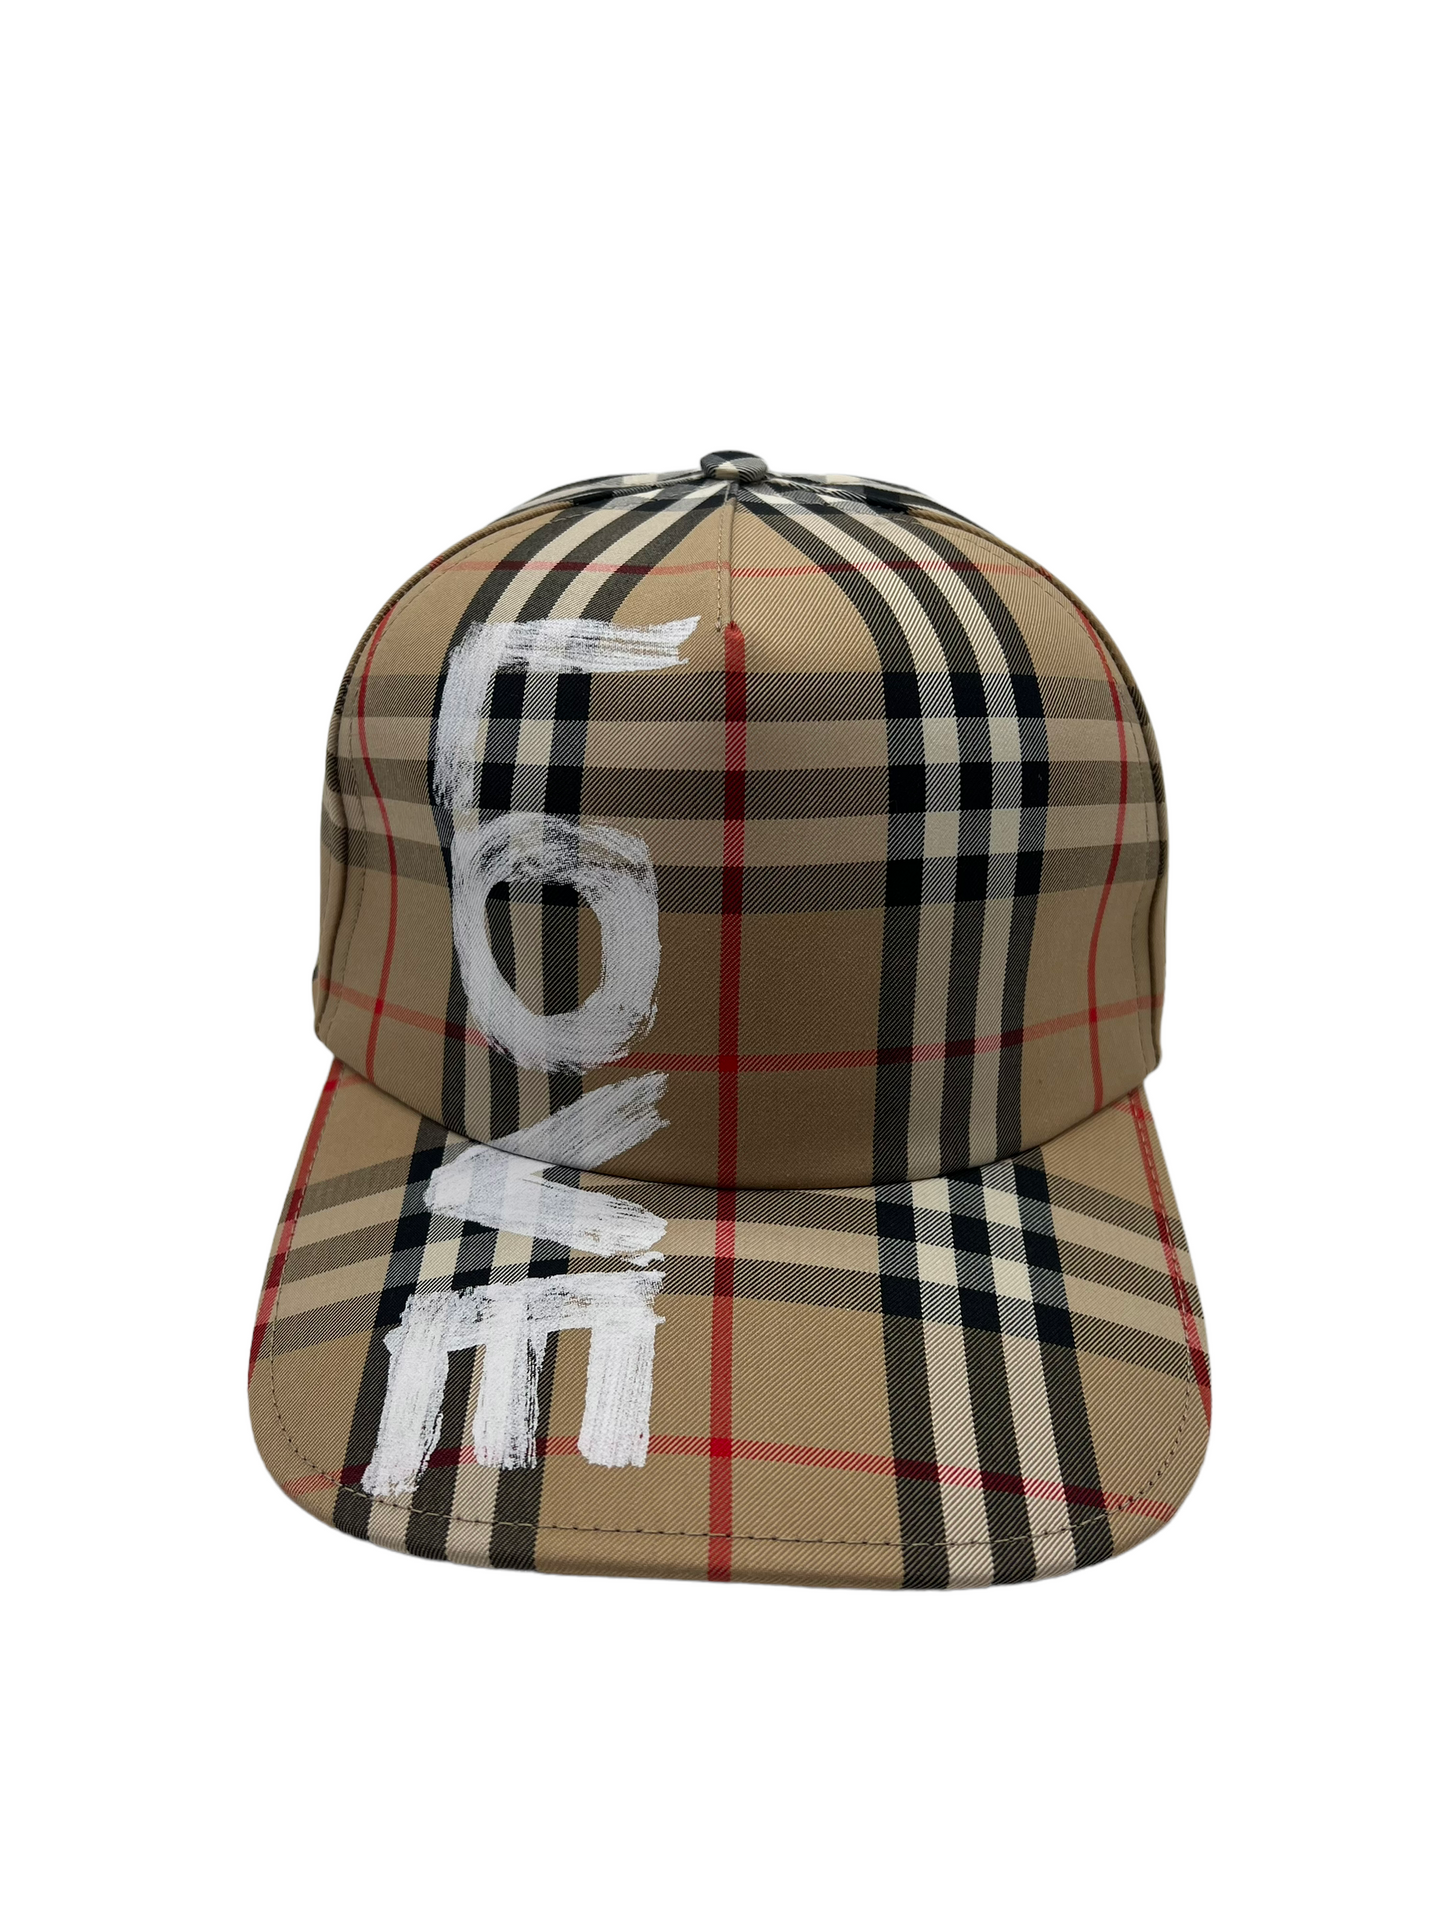 Burberry Plaid Love Archive Size M Trucker Hat